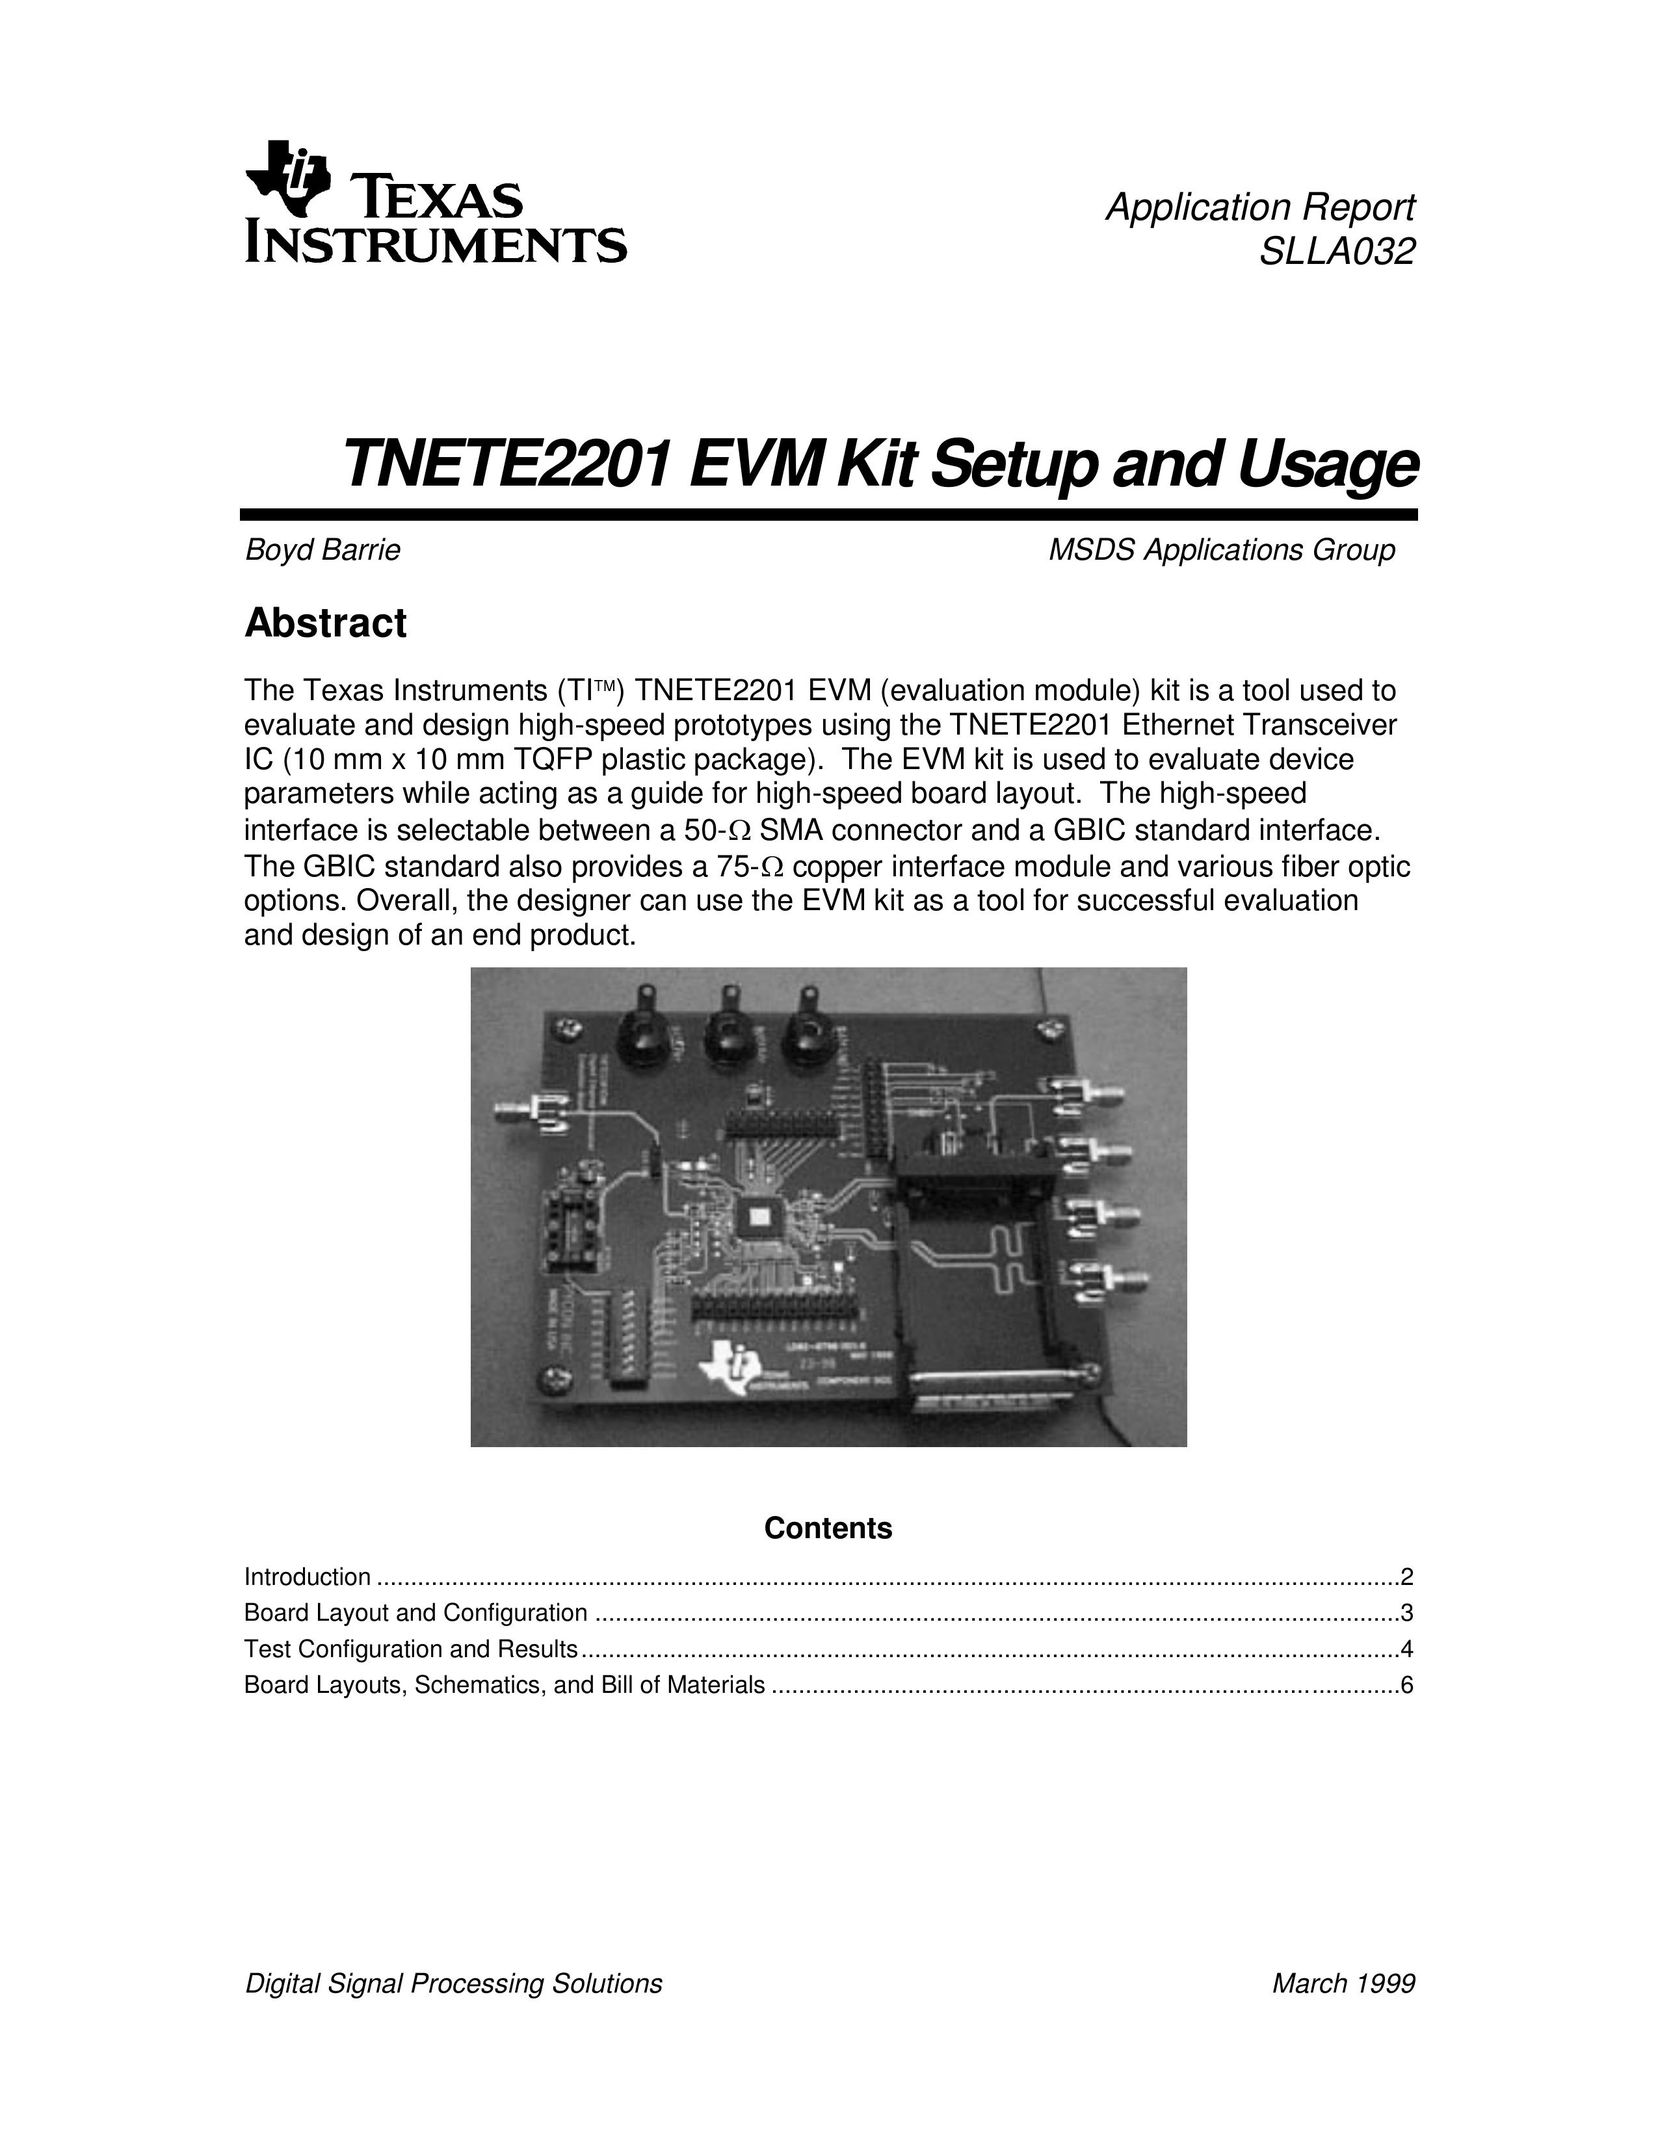 Texas Instruments TNETE2201 Network Card User Manual